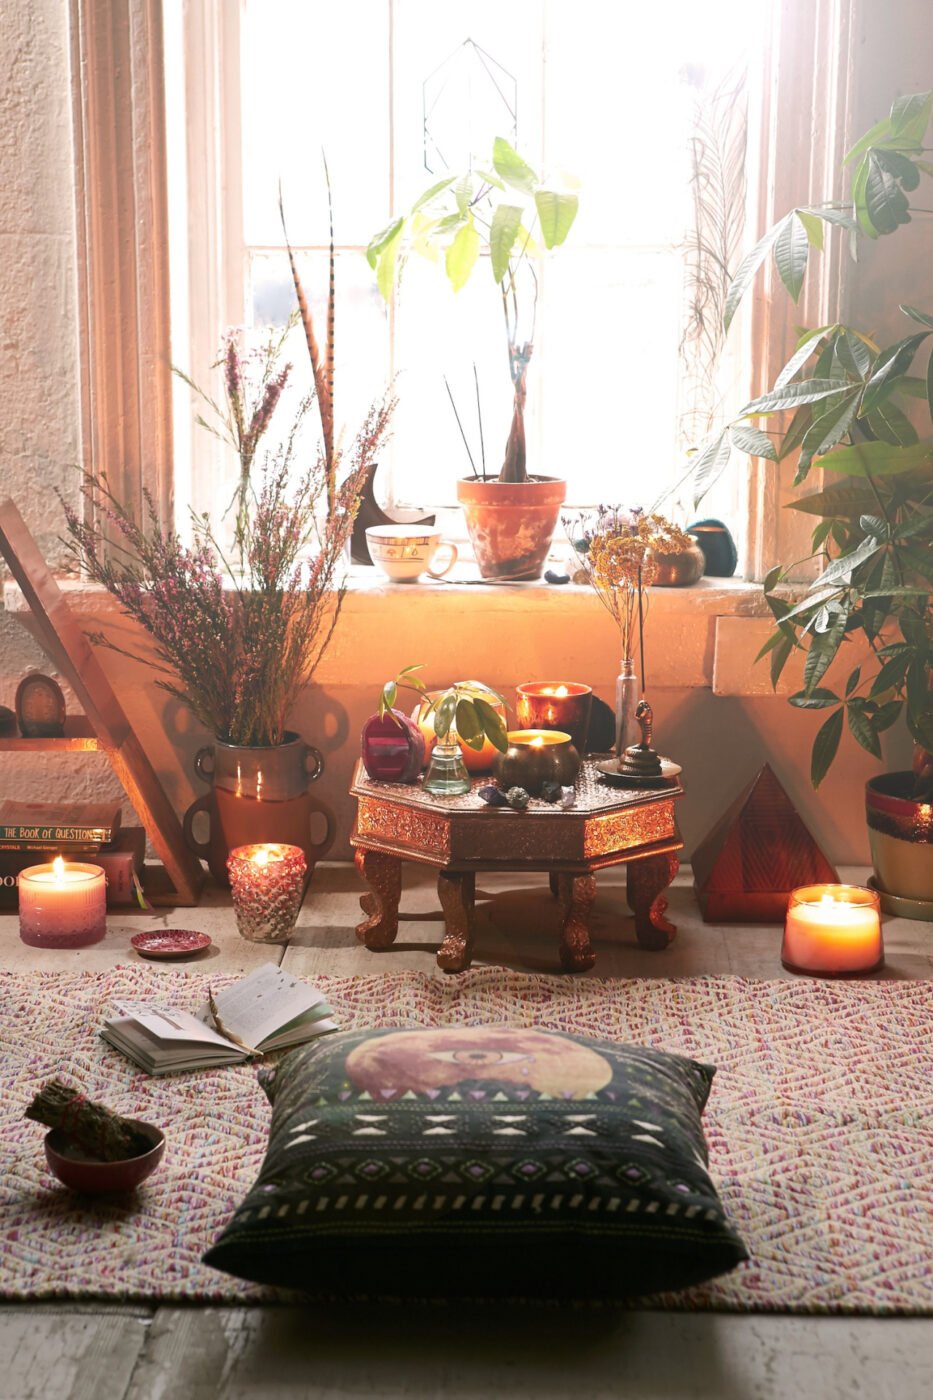 Zen Space: 20 Beautiful Meditation Room Design Ideas